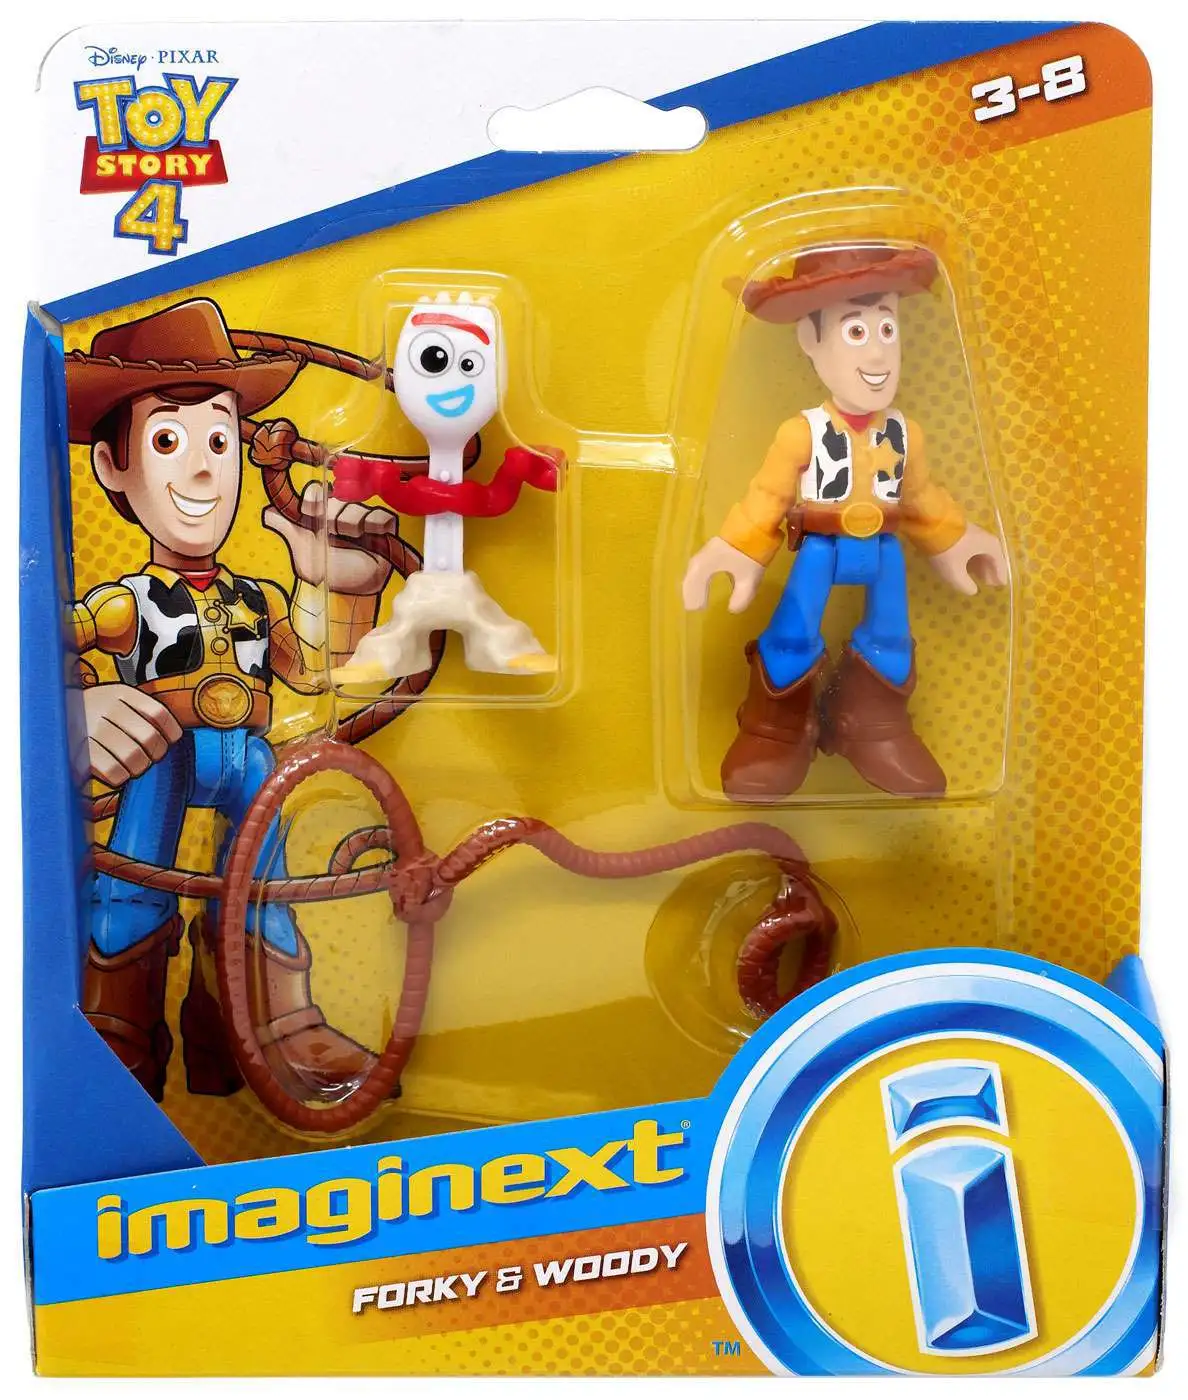 Combat Carl & Bo Peep 3” Details about   Fisher-Price Imaginext Disney Pixar Toy Story 4 